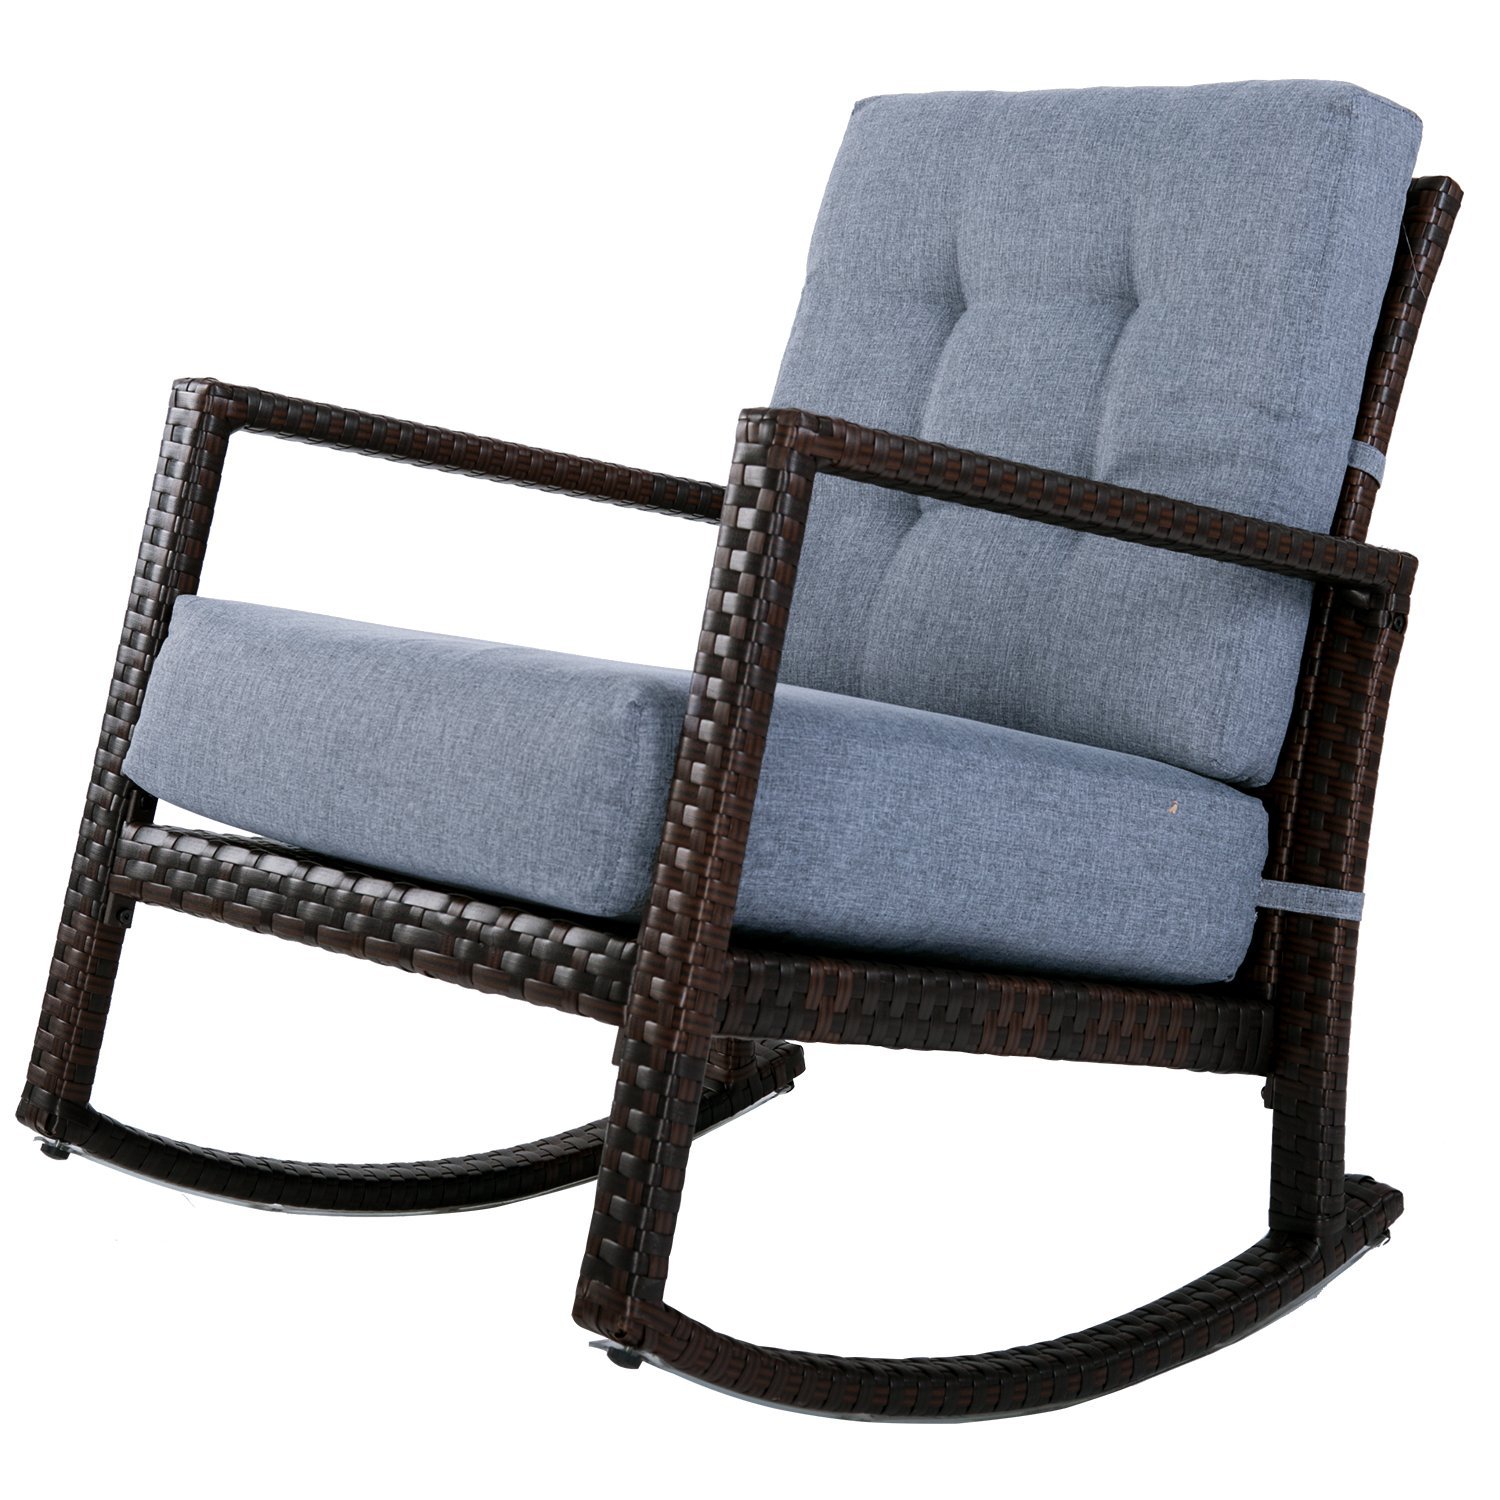 Merax Cushioned Rattan Rocker Chair Patio Glider Lounge Wicker Chair with Cushion(Grey Cushion) - image 2 of 3